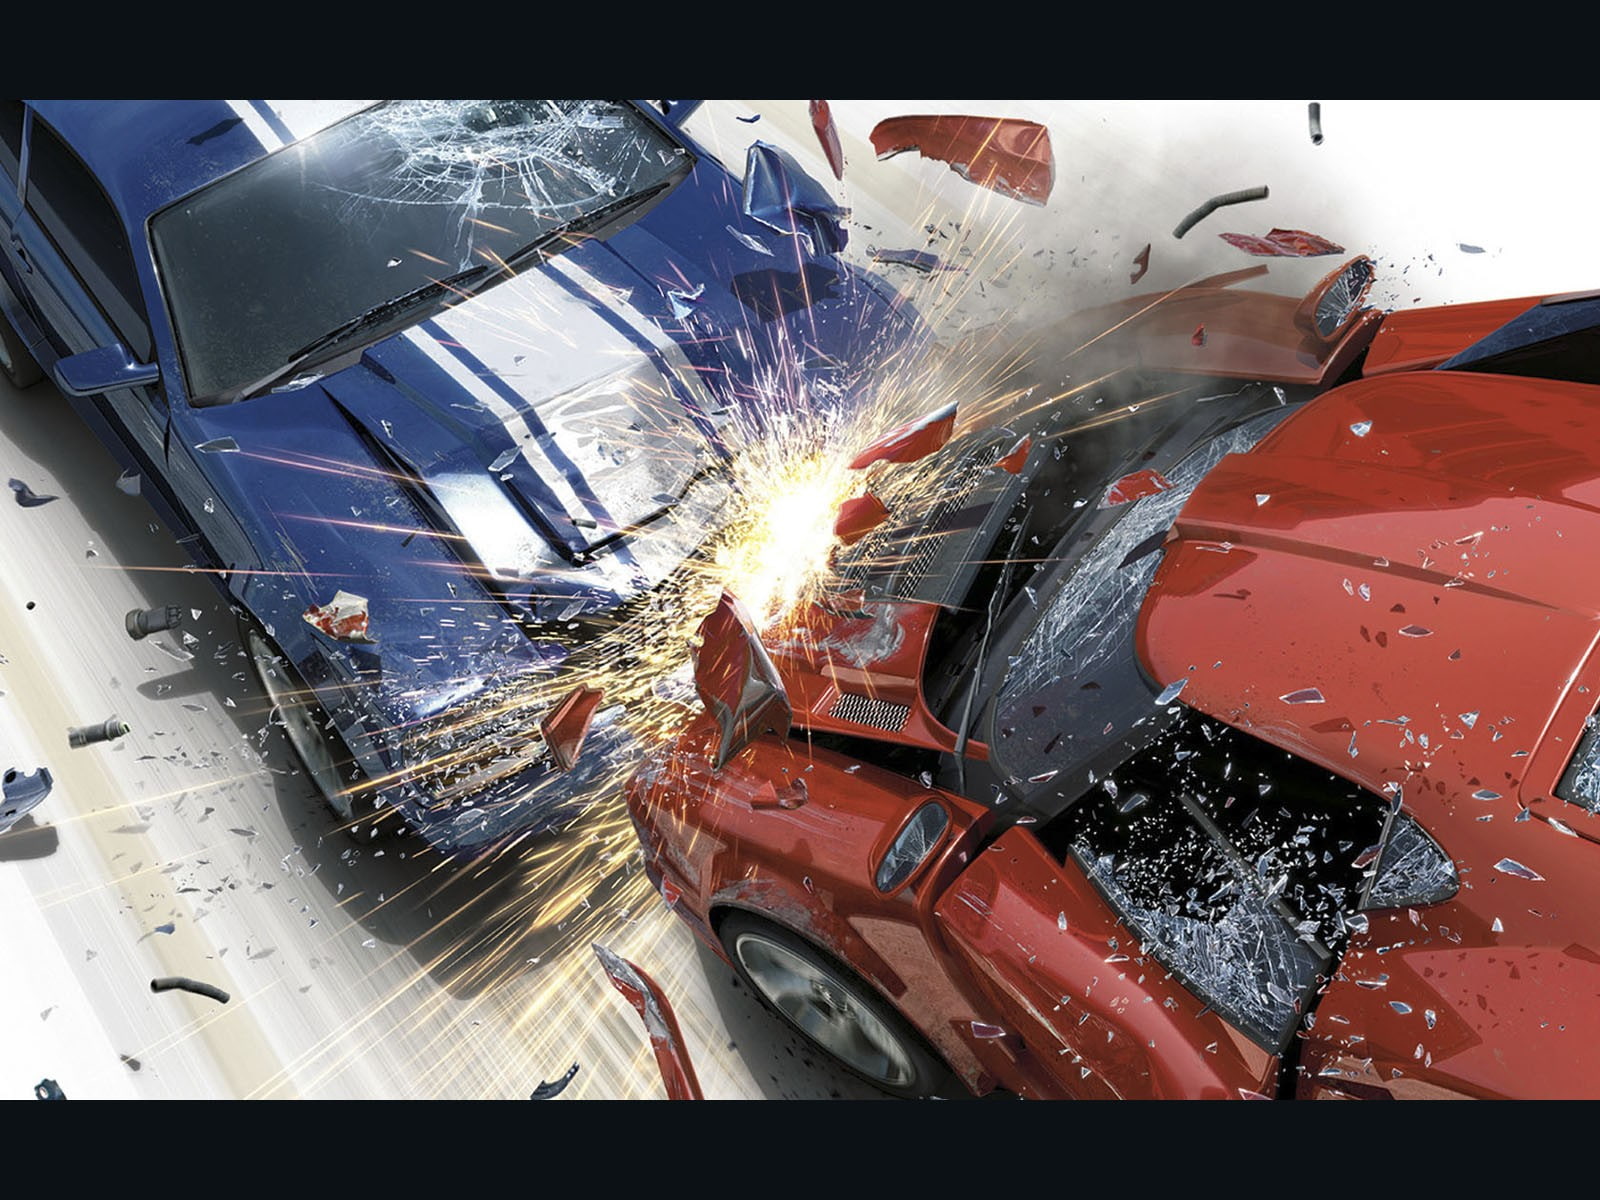 Burnout Dominator, video games, car, vehicle, crash, wreck